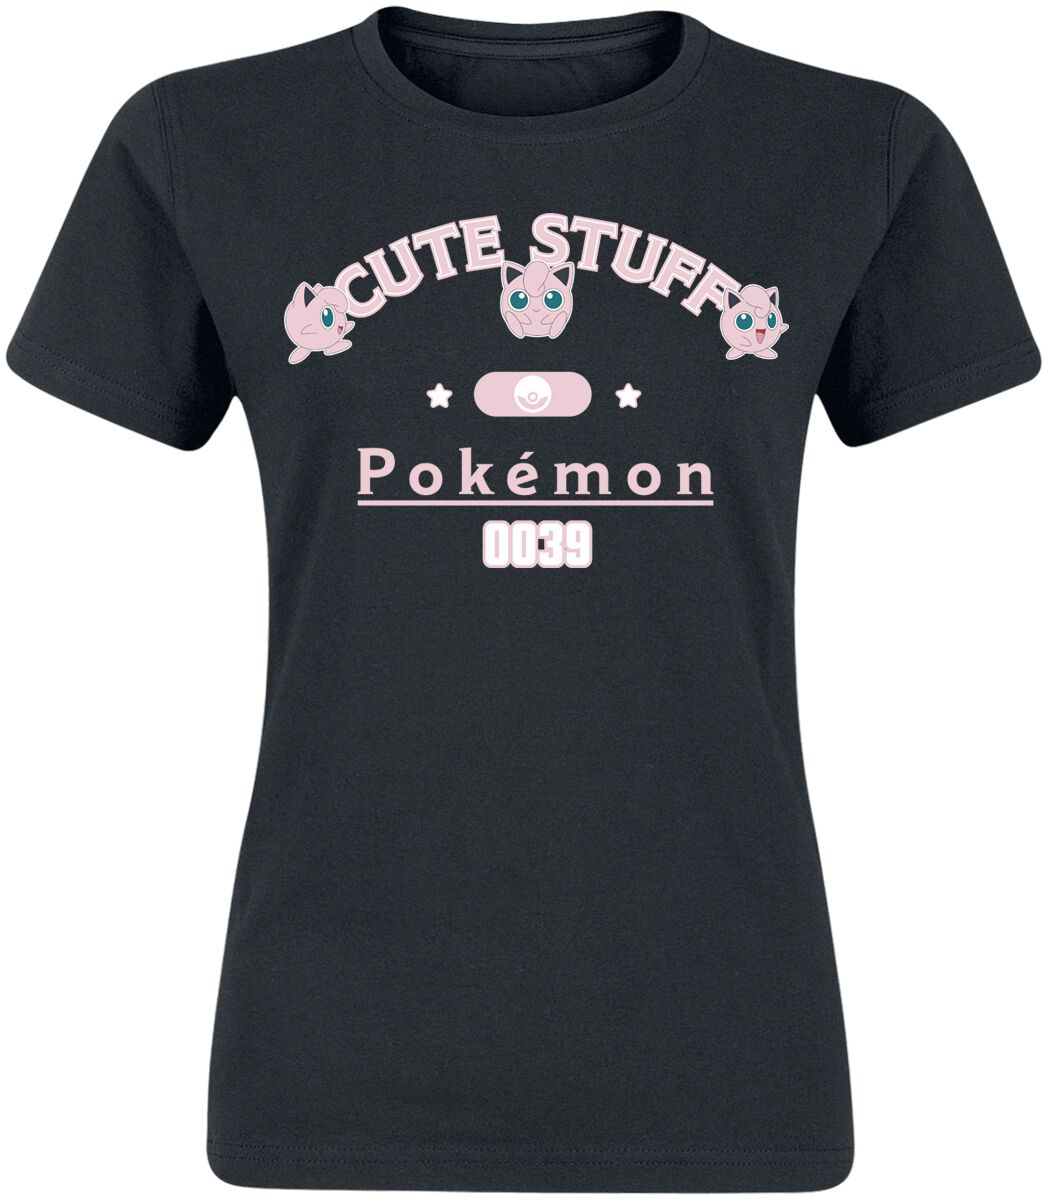 Pokémon Pummeluff - Cute Stuff T-Shirt schwarz in XL